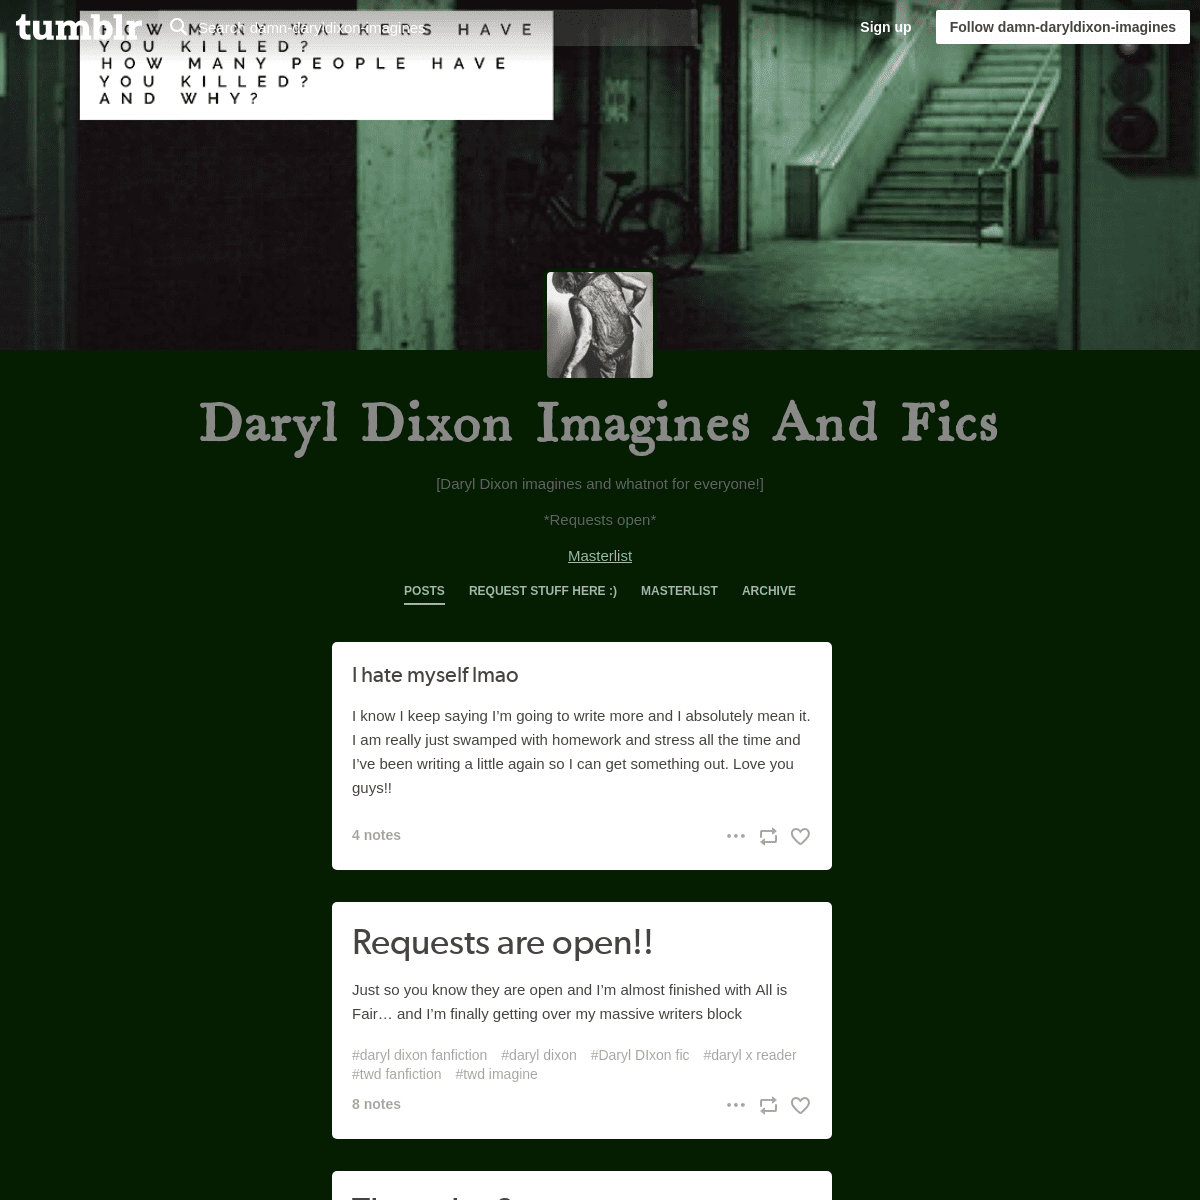 A complete backup of damn-daryldixon-imagines.tumblr.com